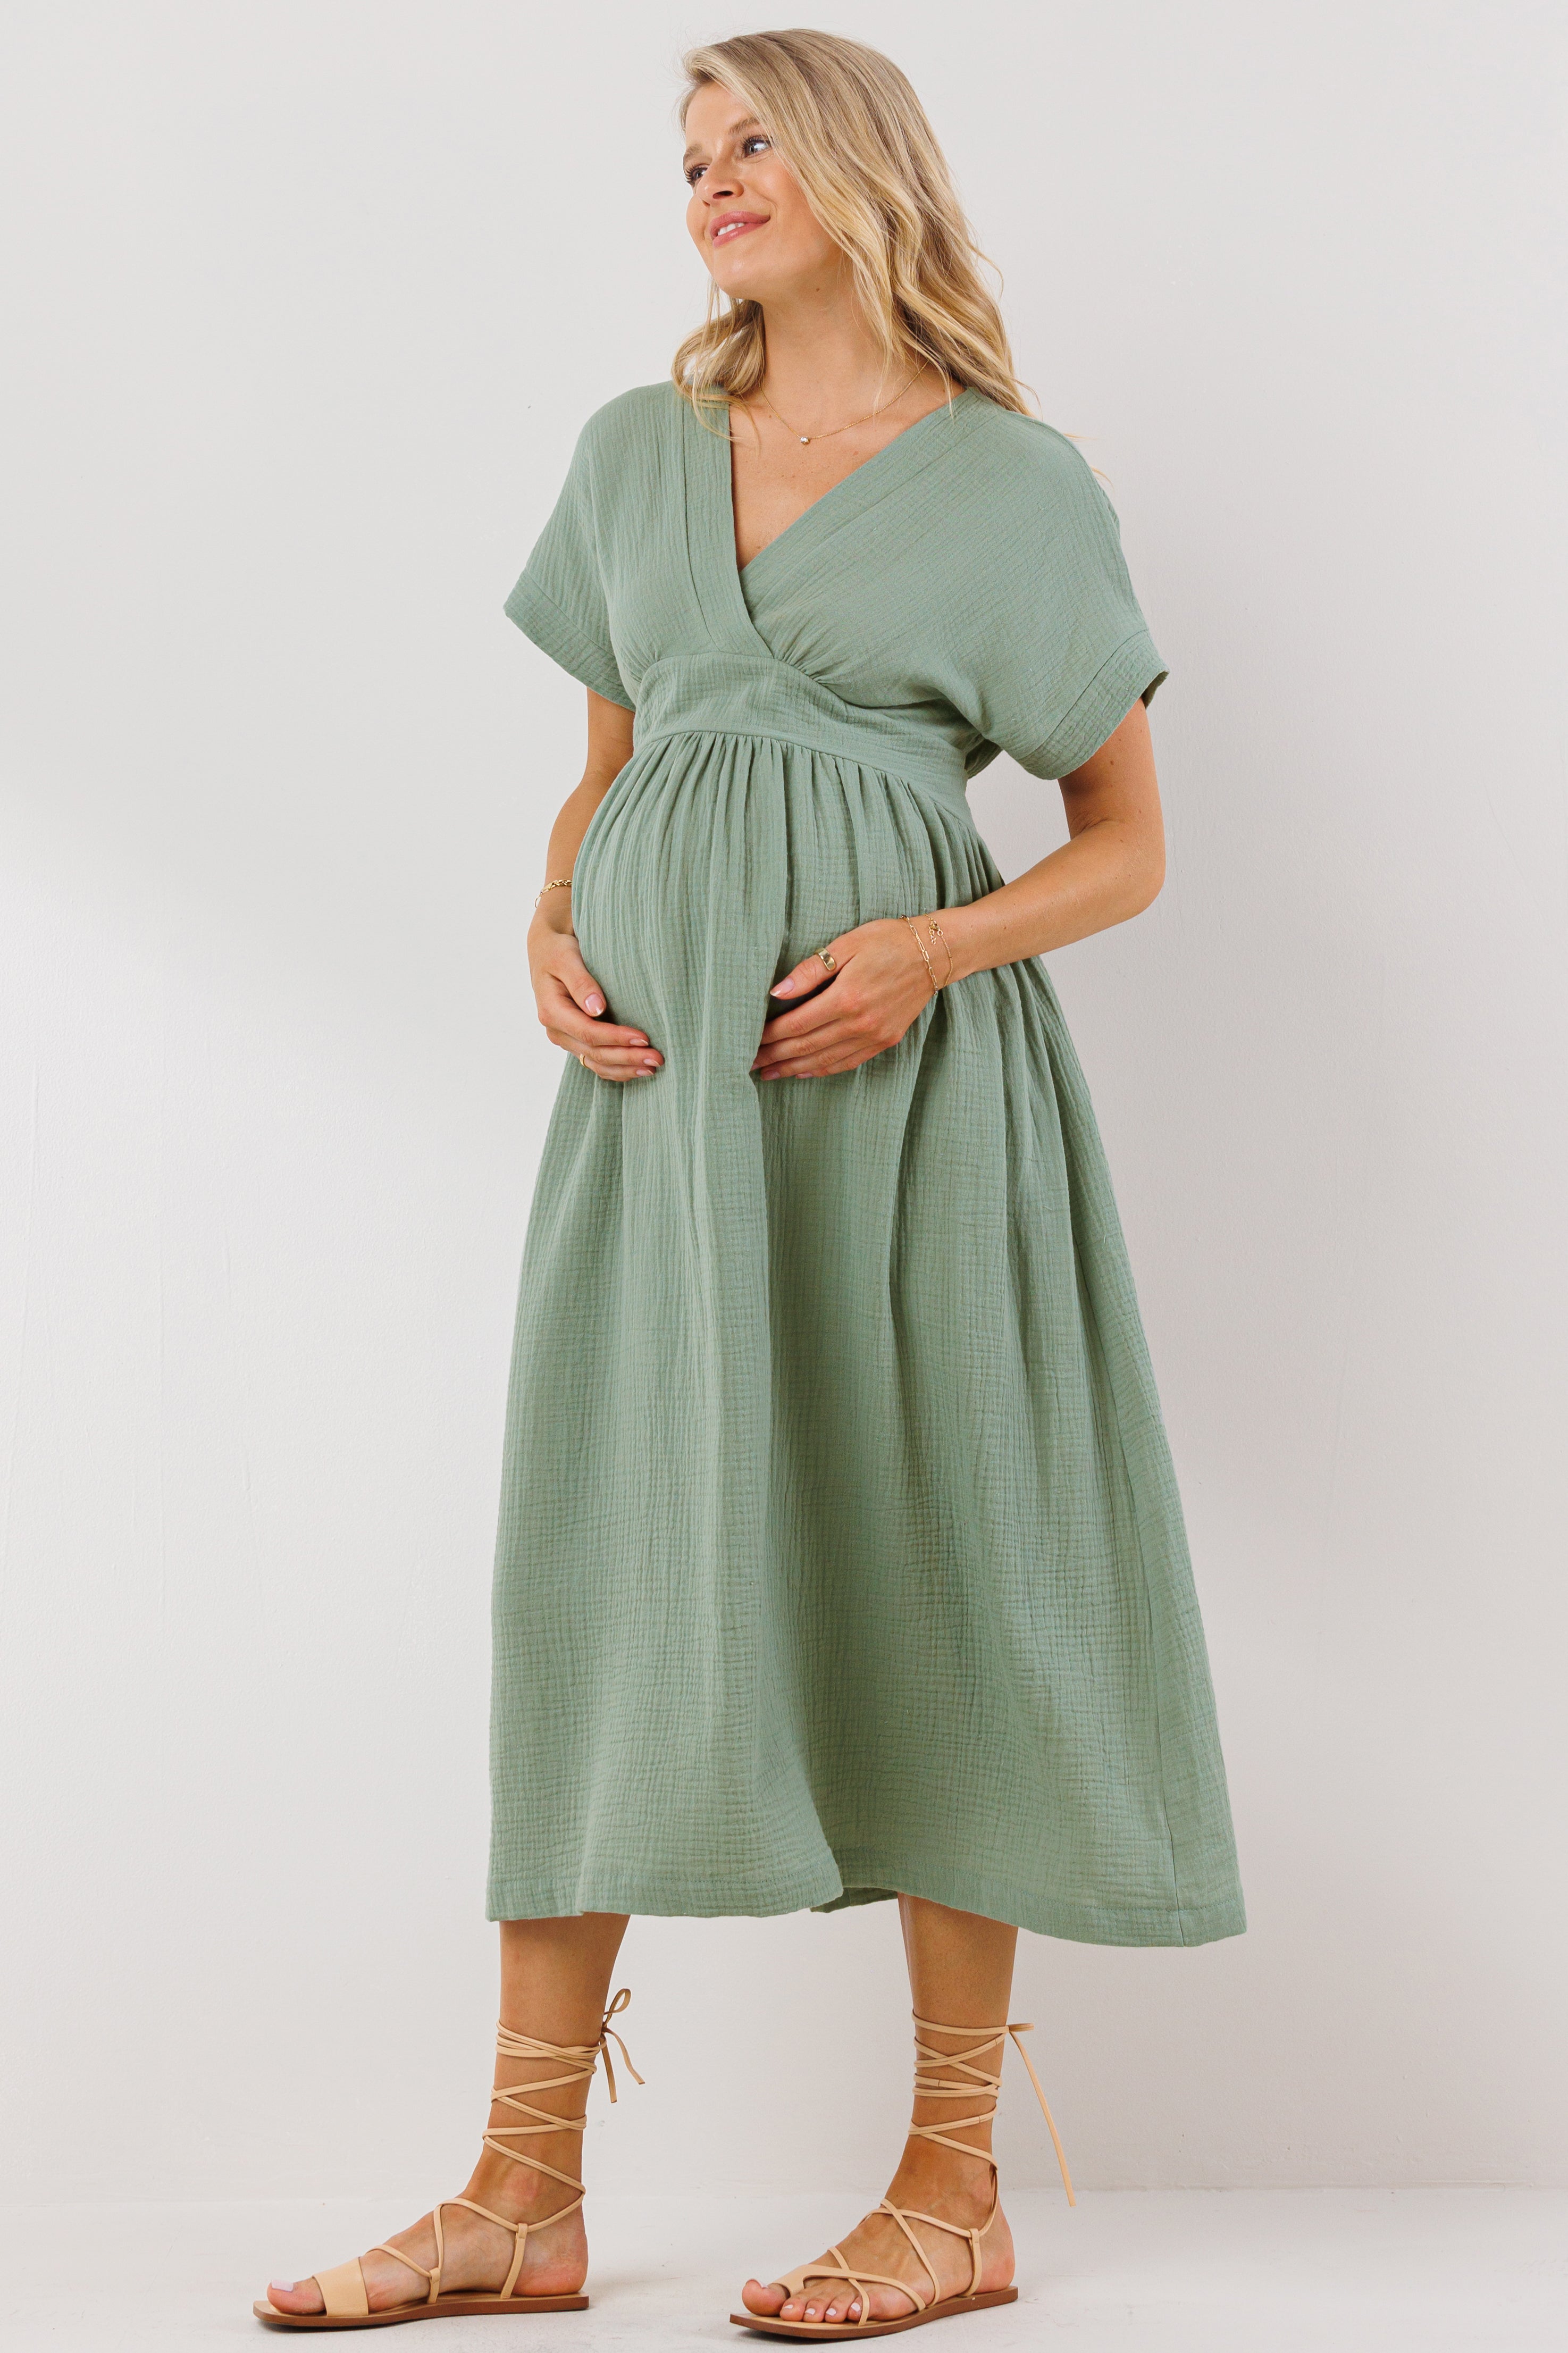 Mimosa Pine Green Dress Maternity Dress Wrap Linen Dress